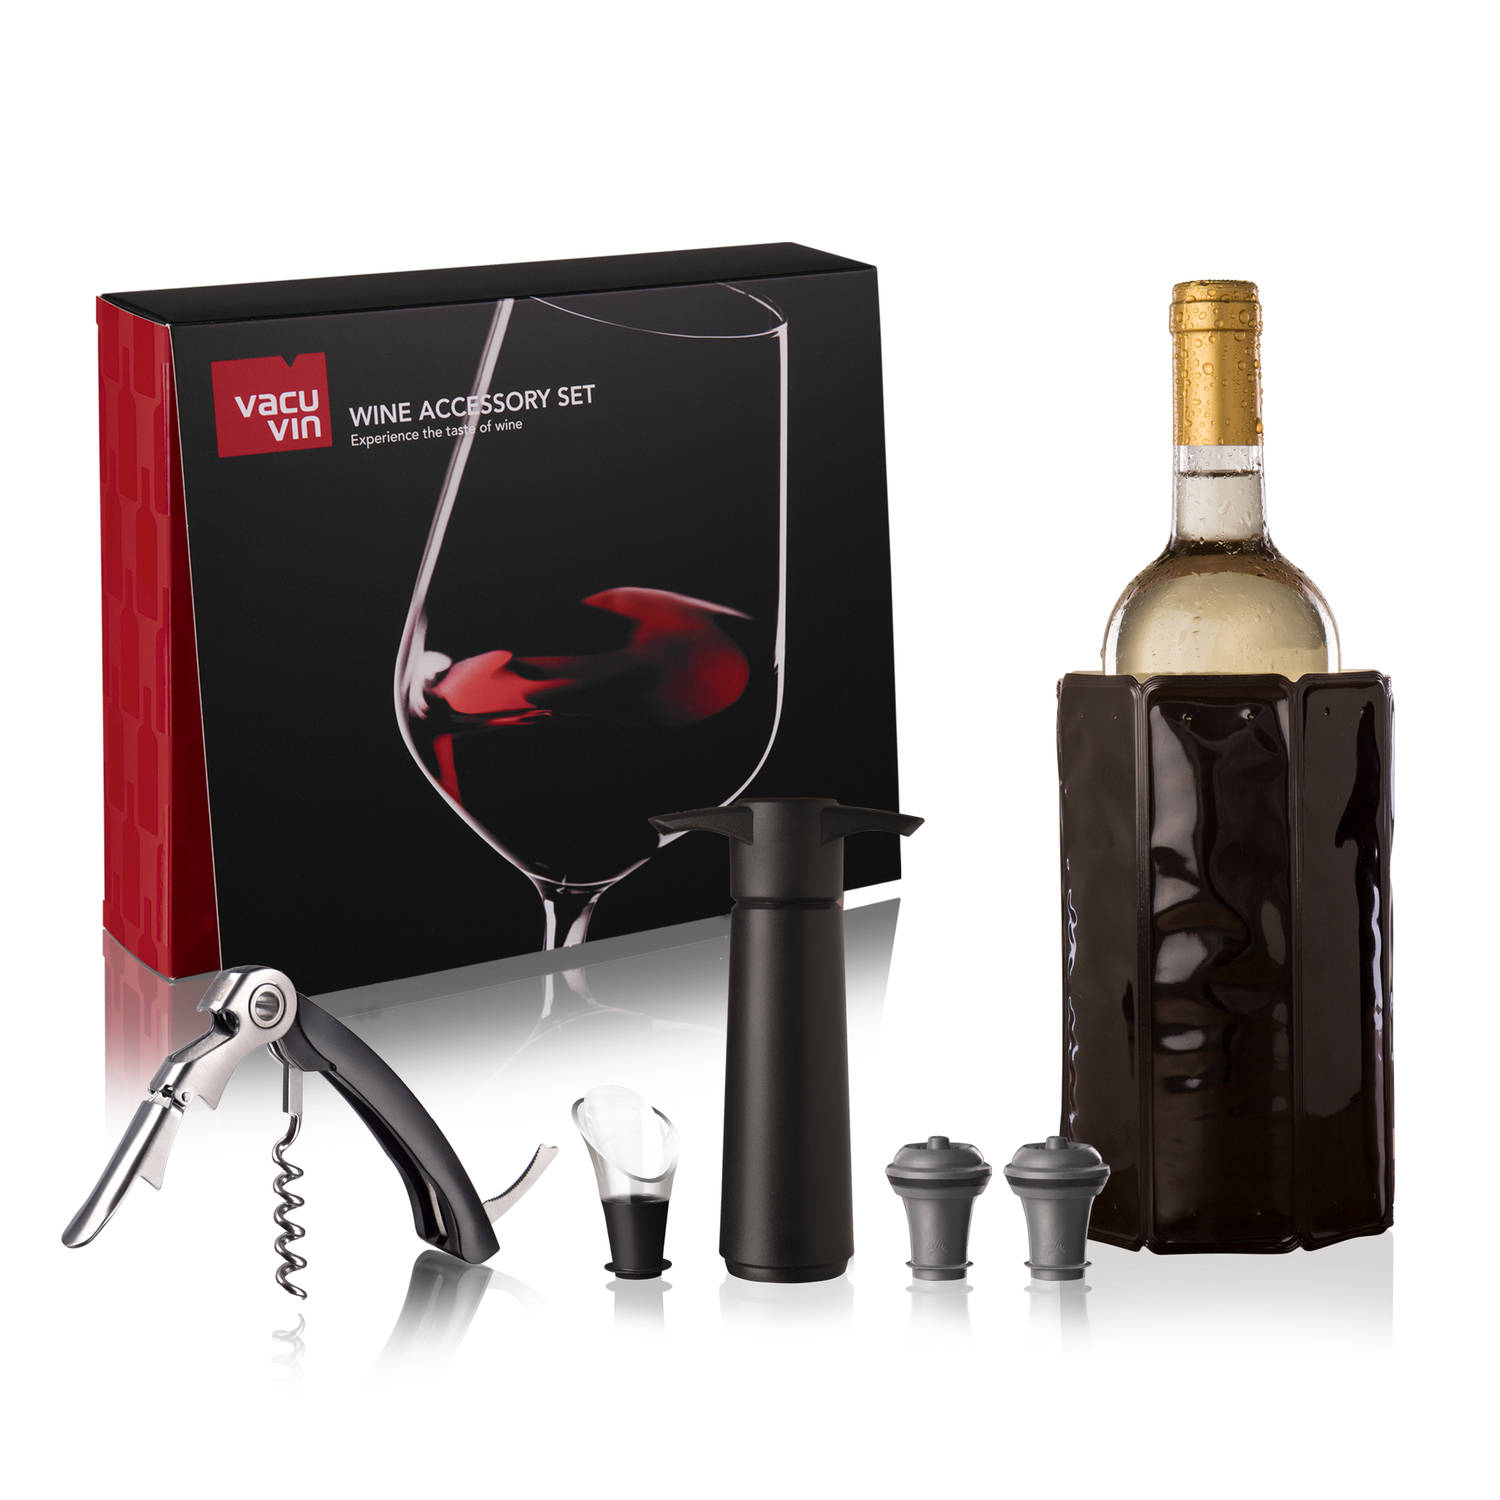 Wine accessory set